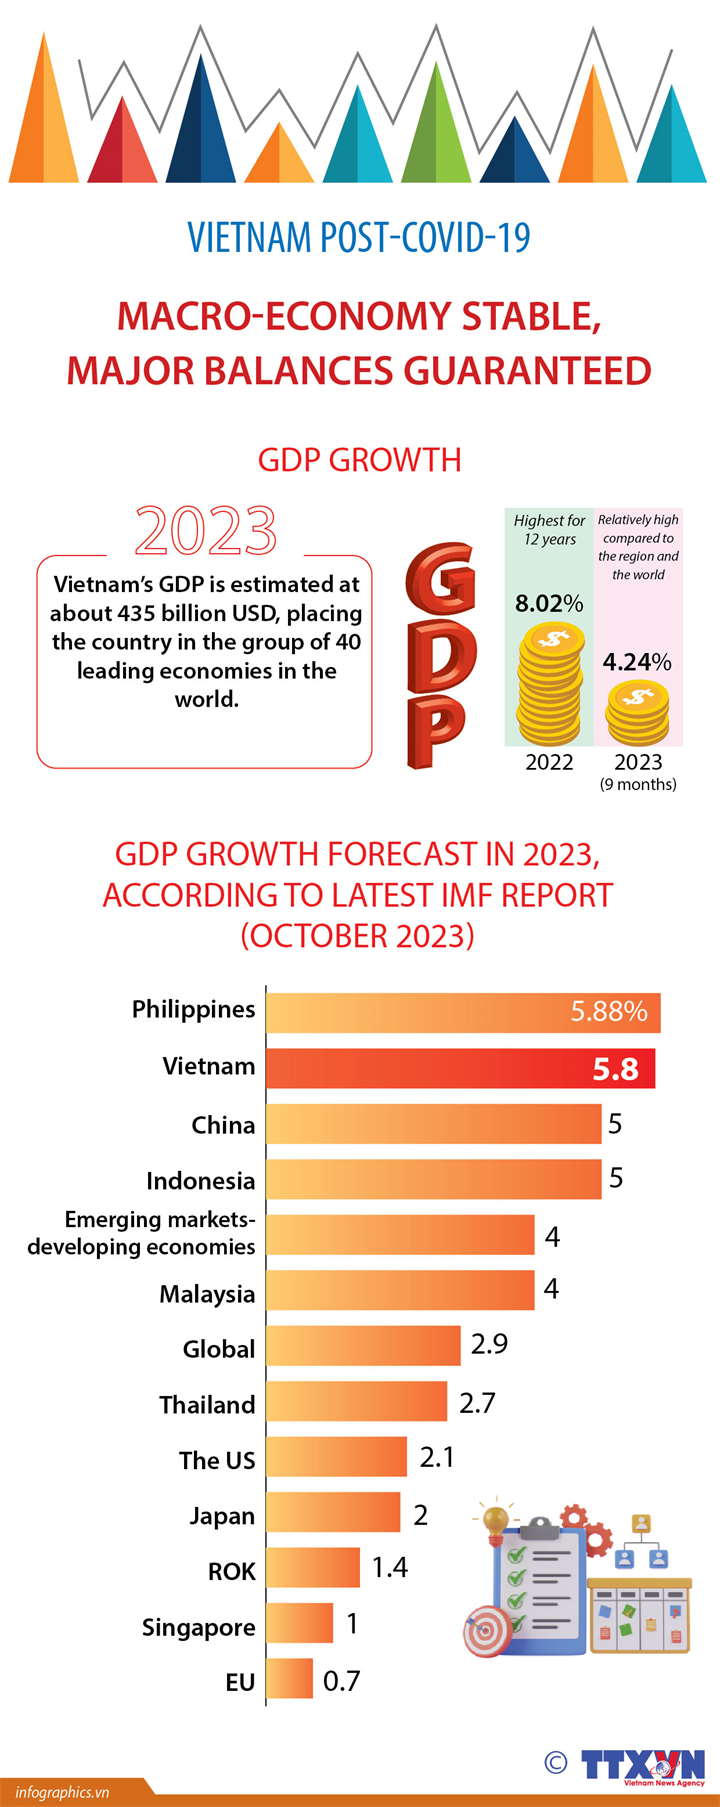 Vietnam post-COVID-19: Macro-economy stable, major balances guaranteed